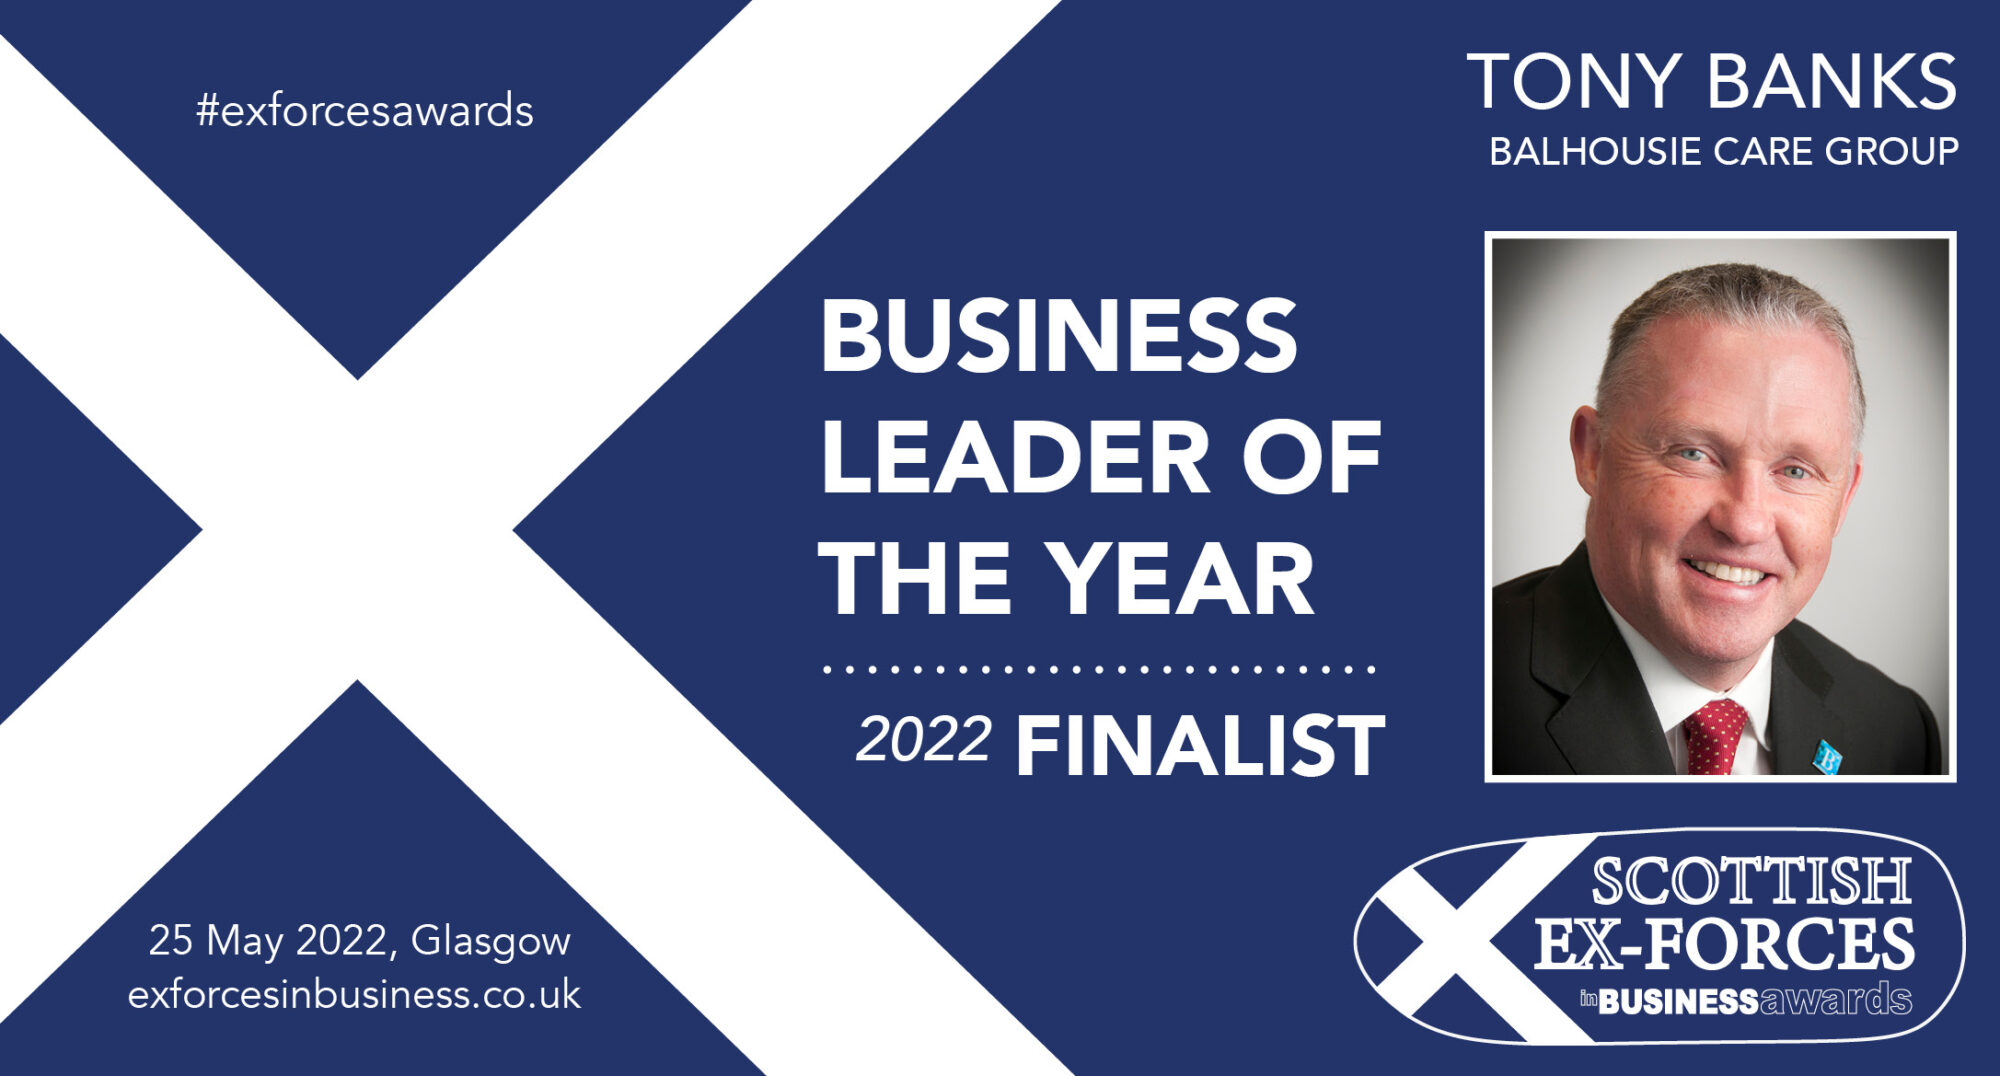 Ex-Forces Business Awards image - Tony Banks